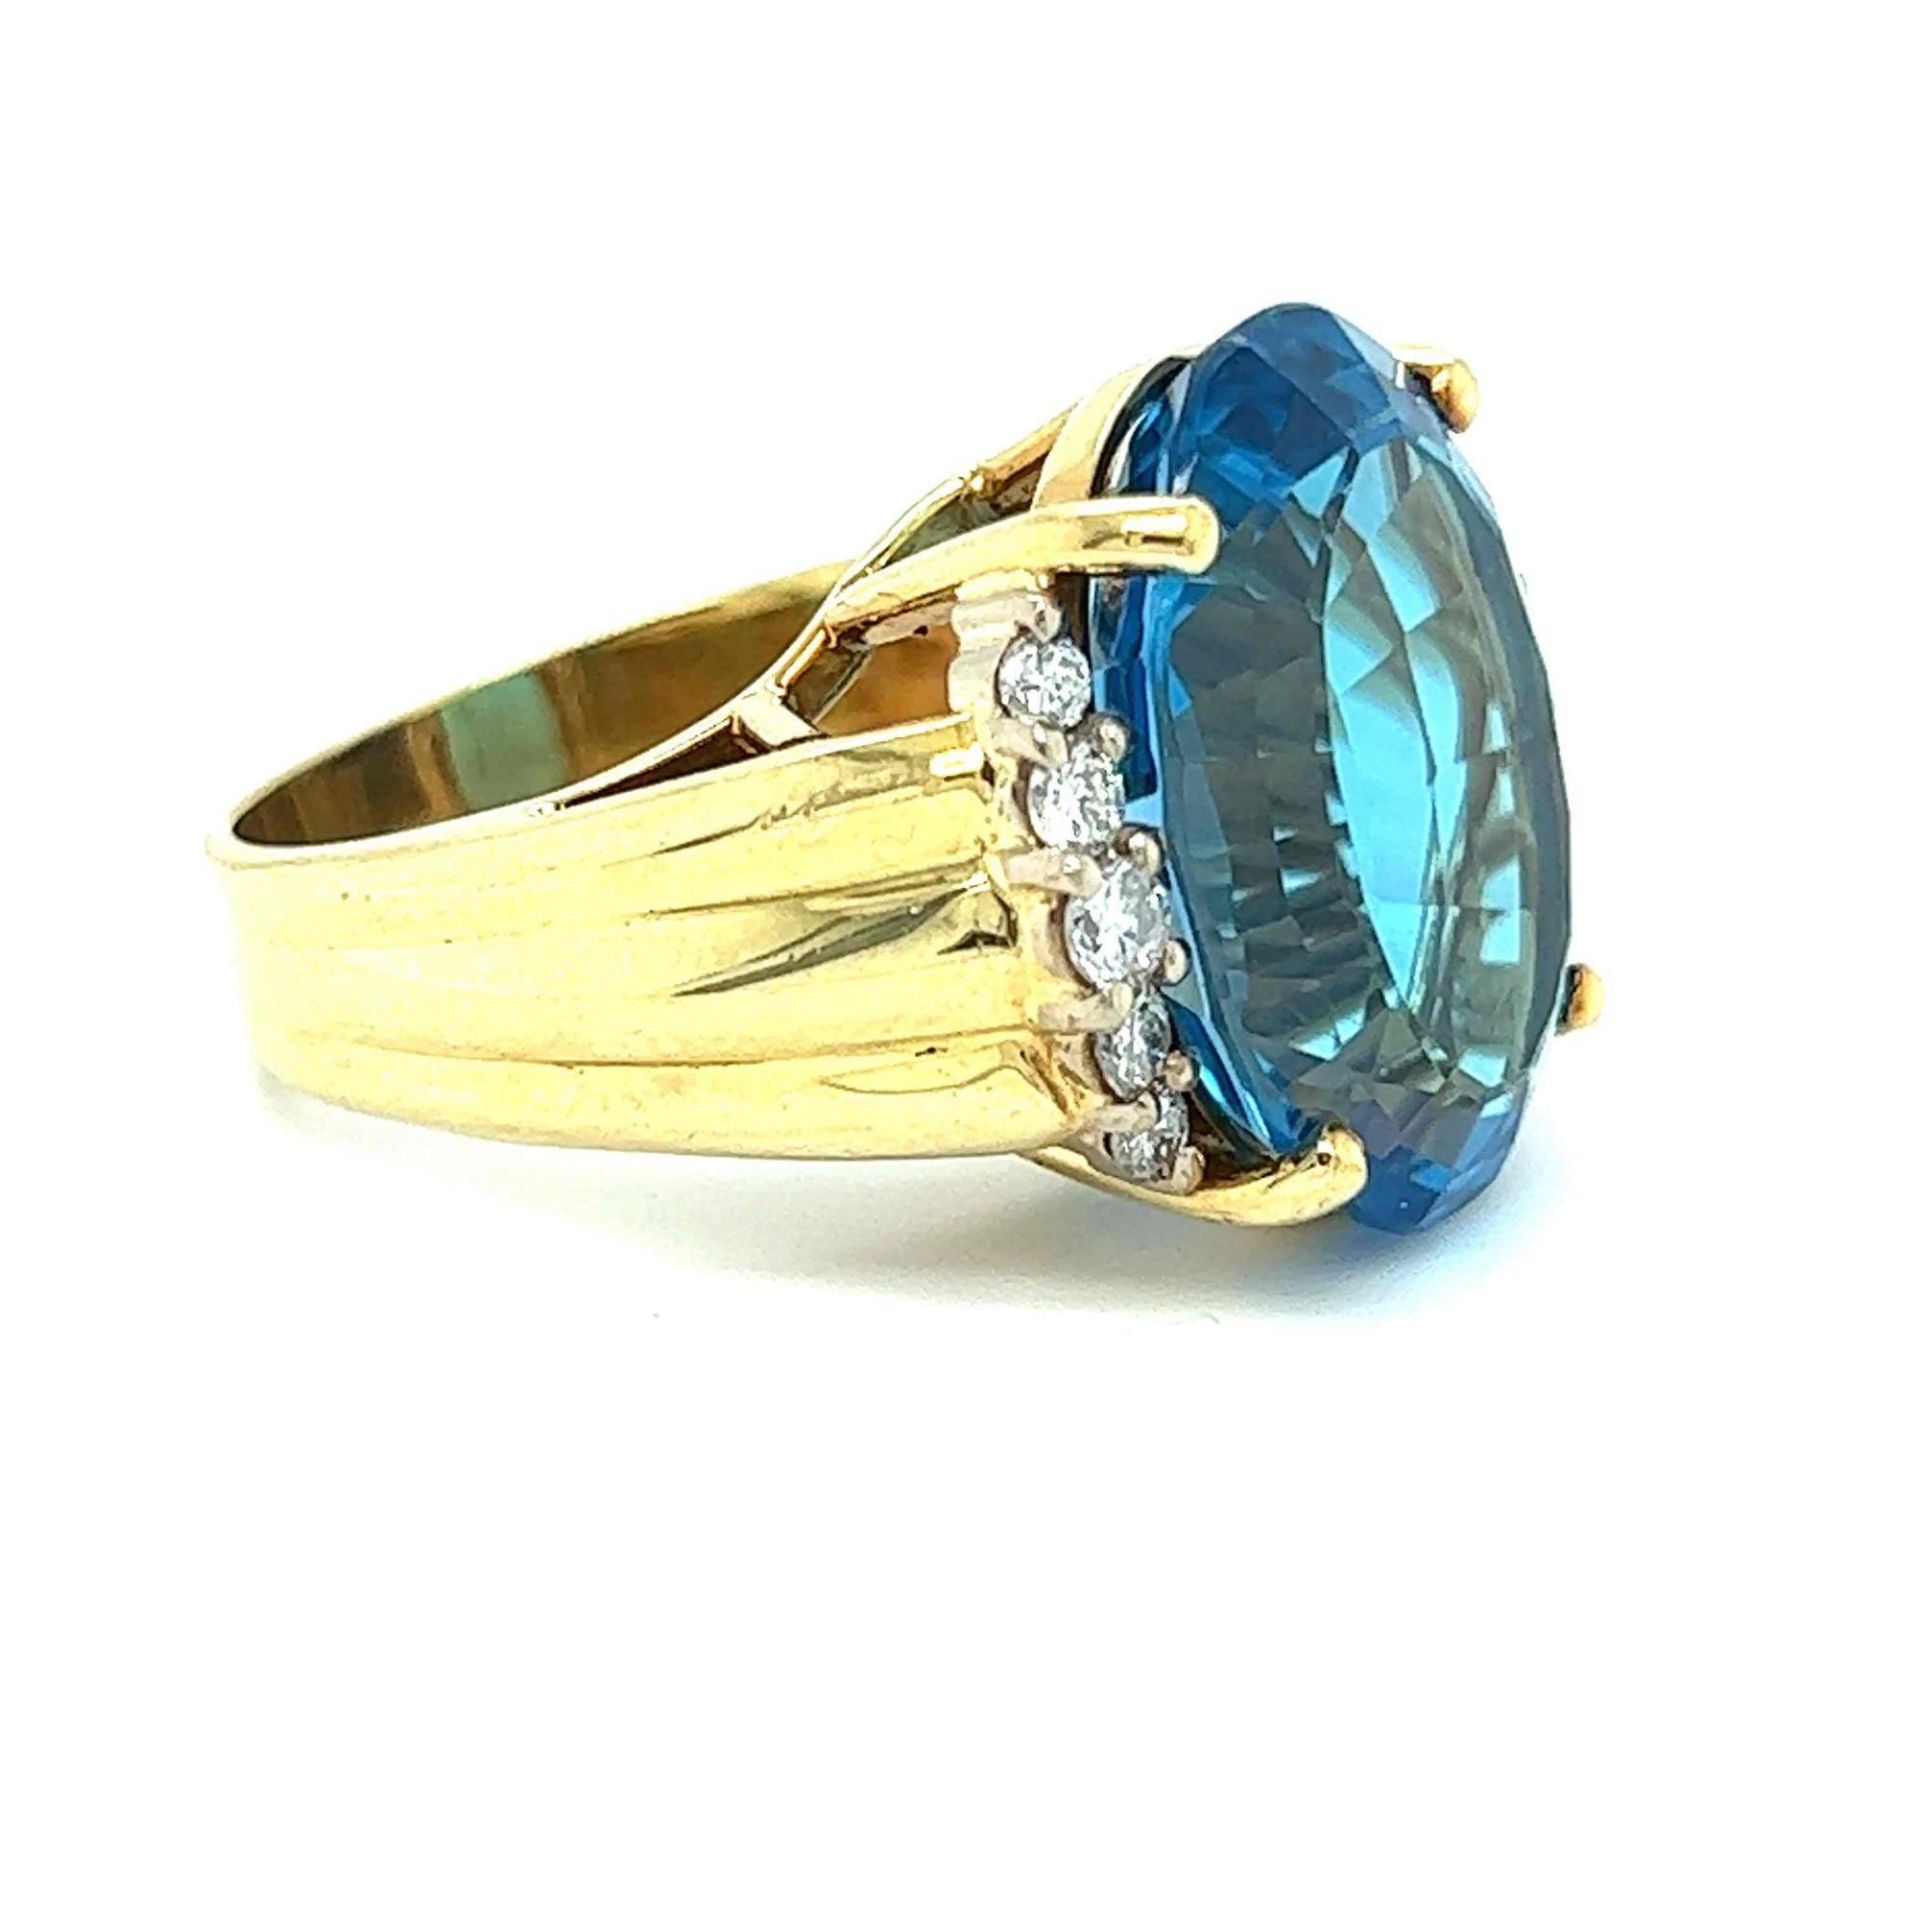 ESTATE BLUE TOPAZ AND DIAMOND RING 18K GOLD - Image 2 of 3